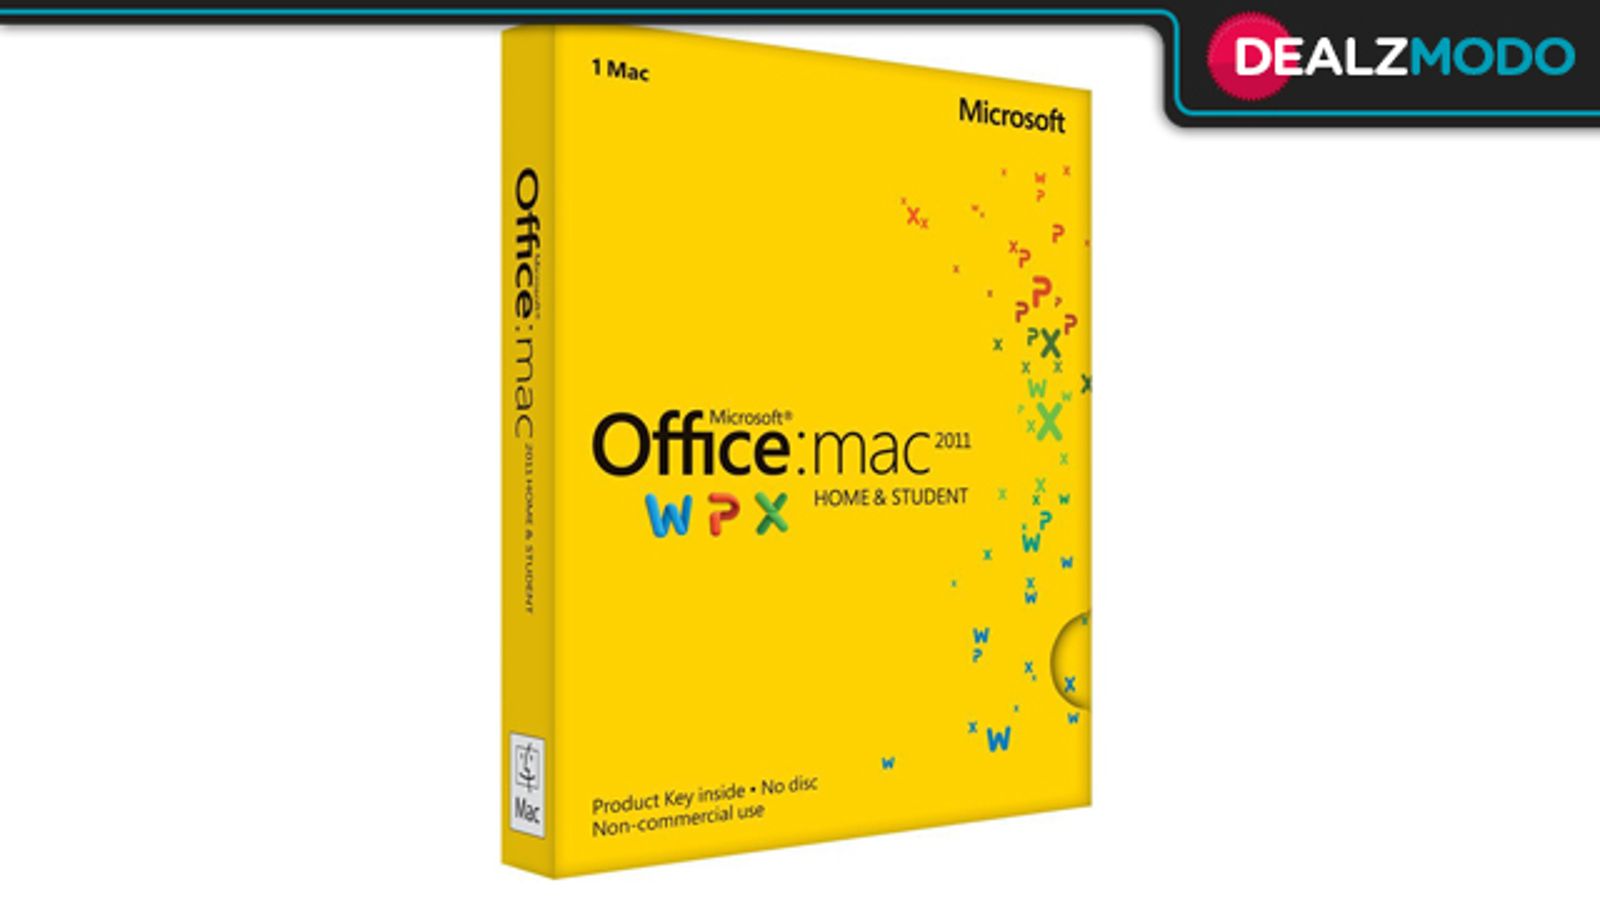 microsoft office 2007 for macs